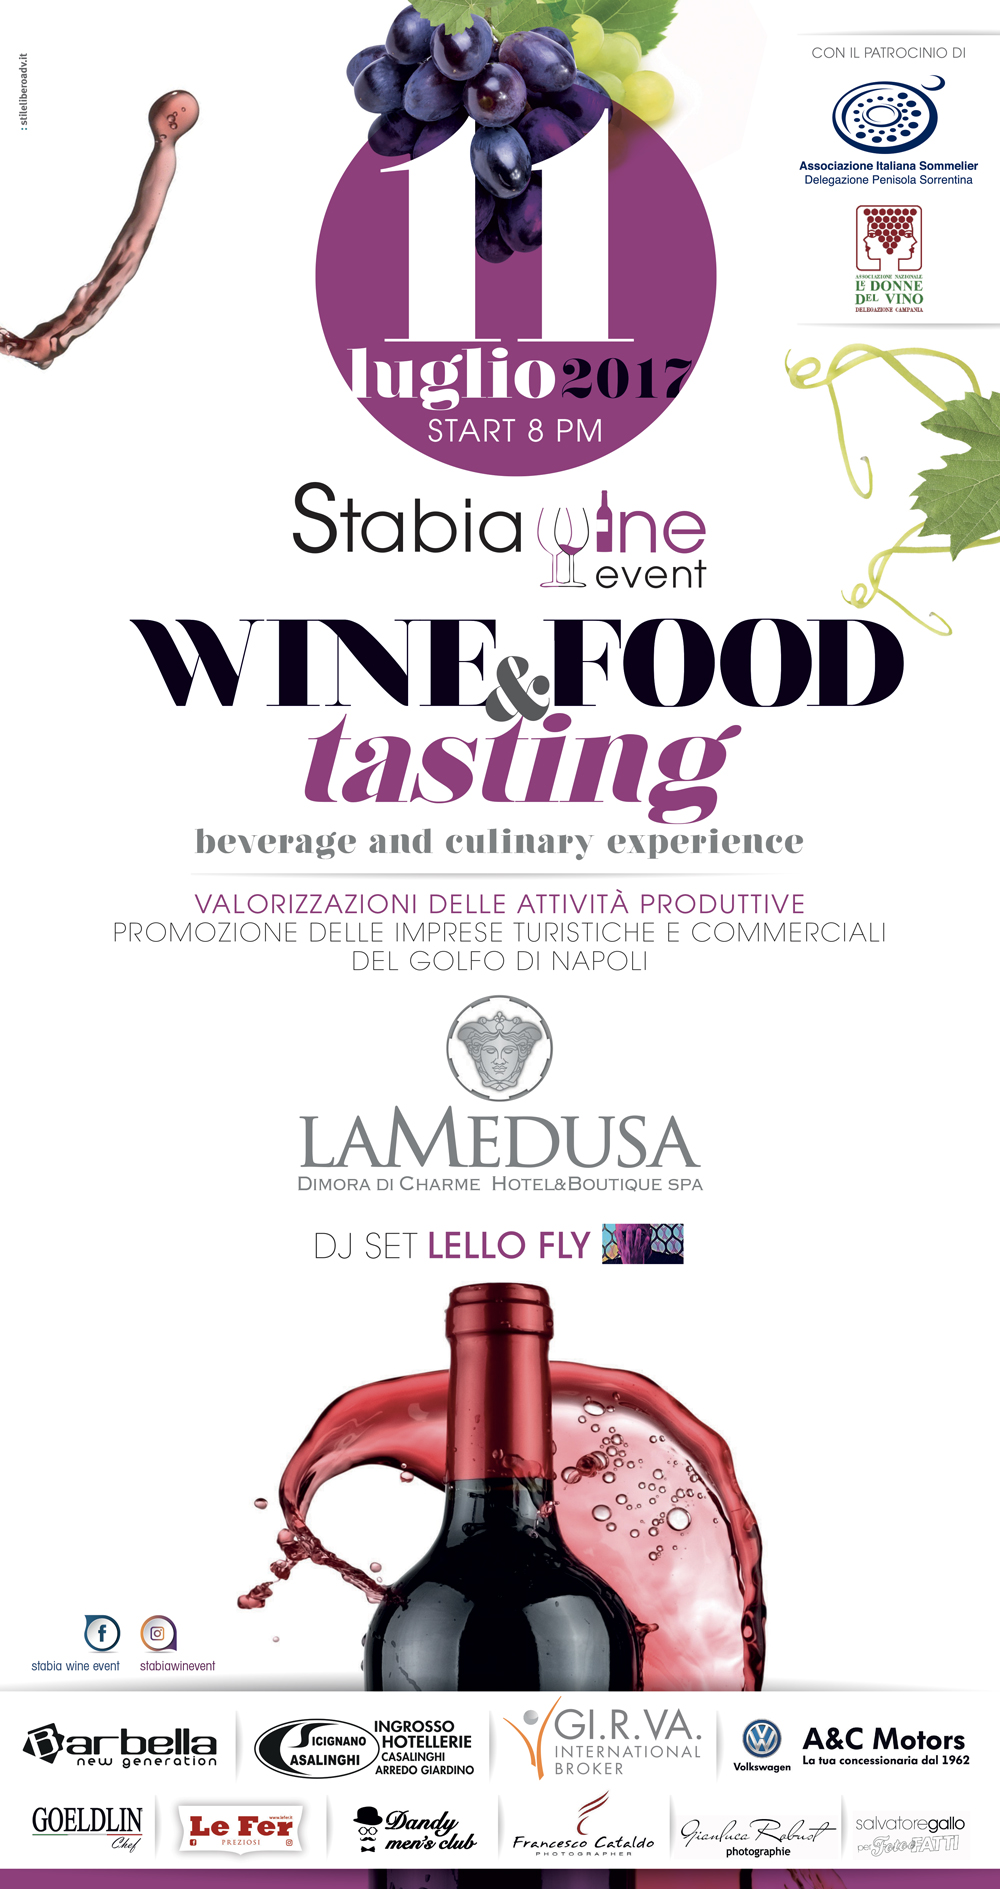 Stabia wine Event